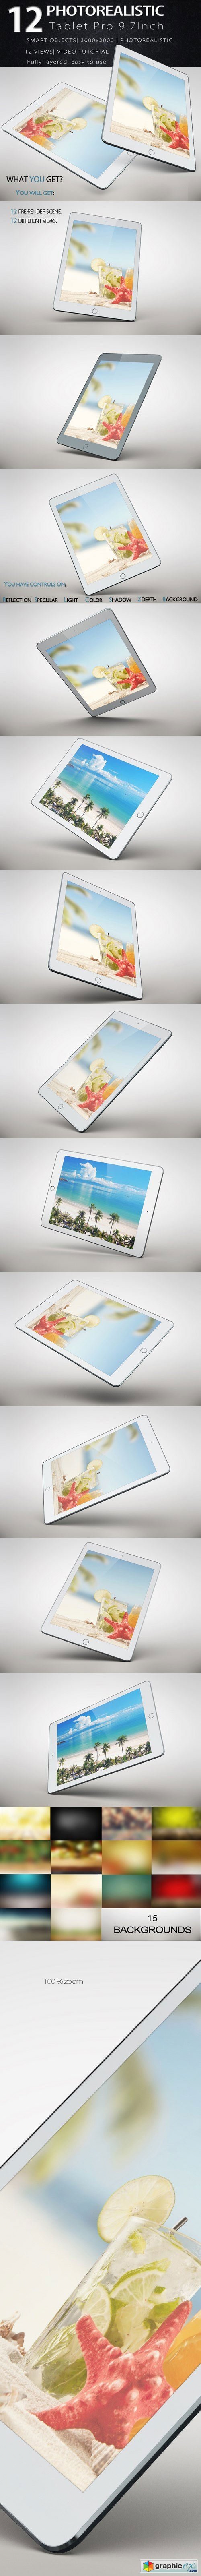 Bundle iPad Pro 9.7 Inch 2016 Mockup